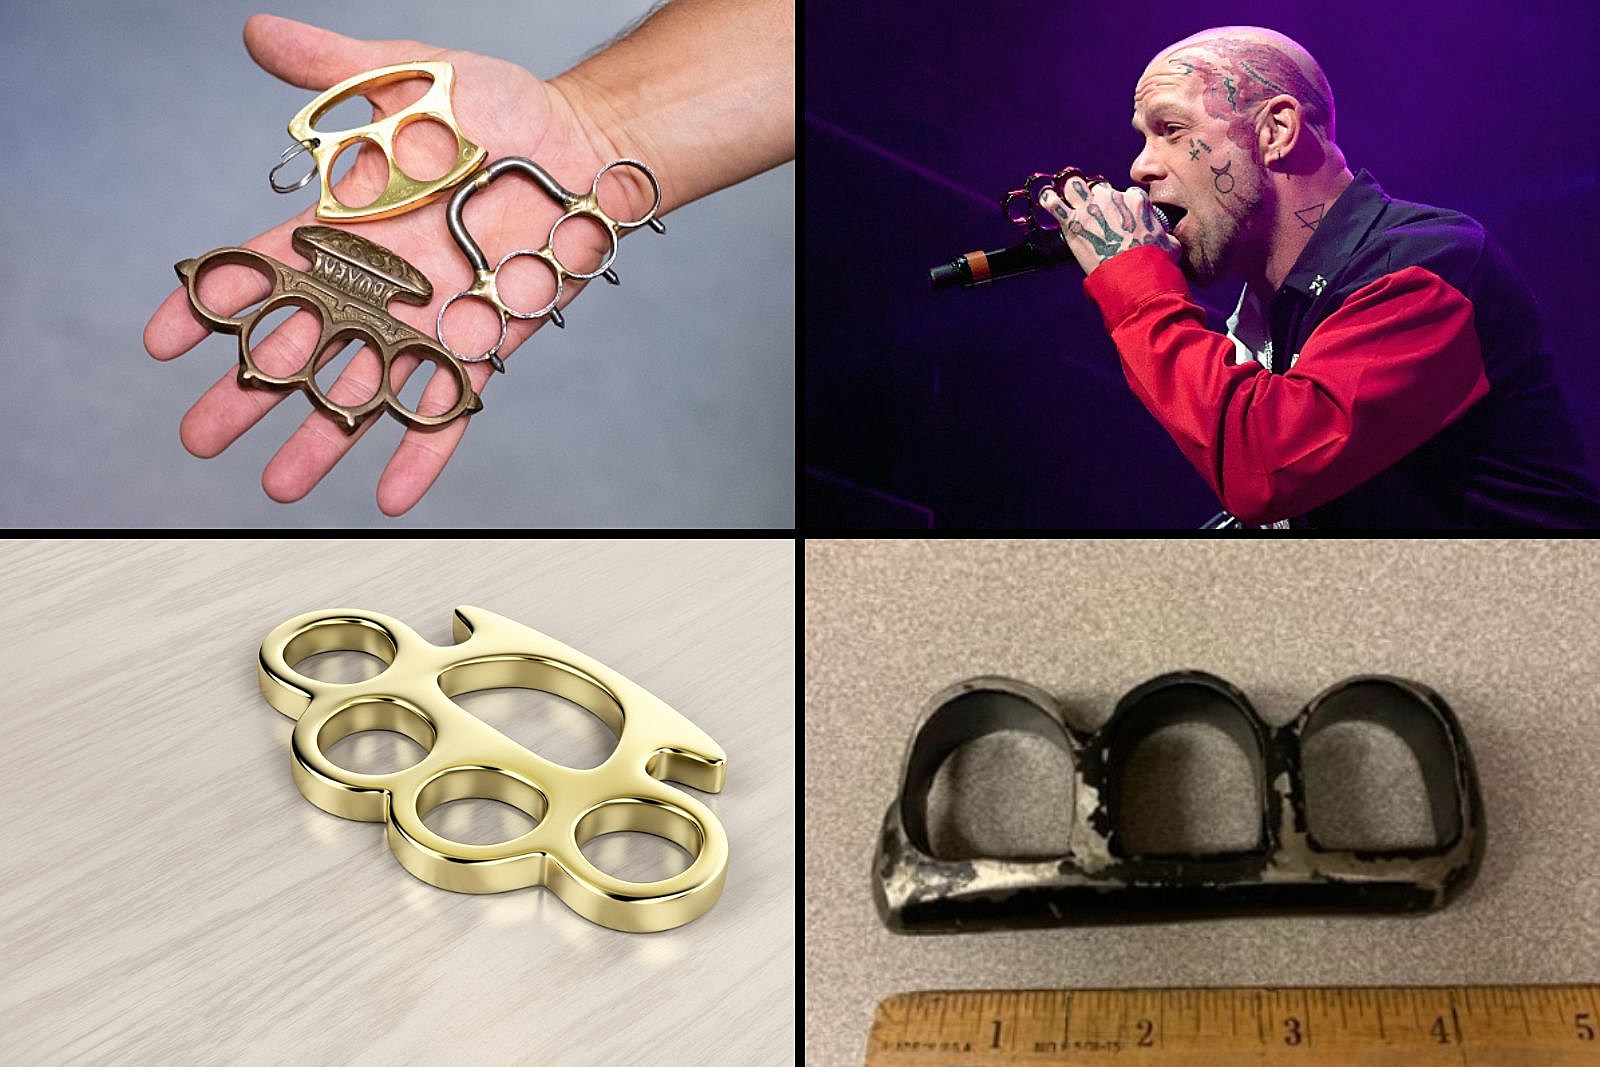 brass knuckles